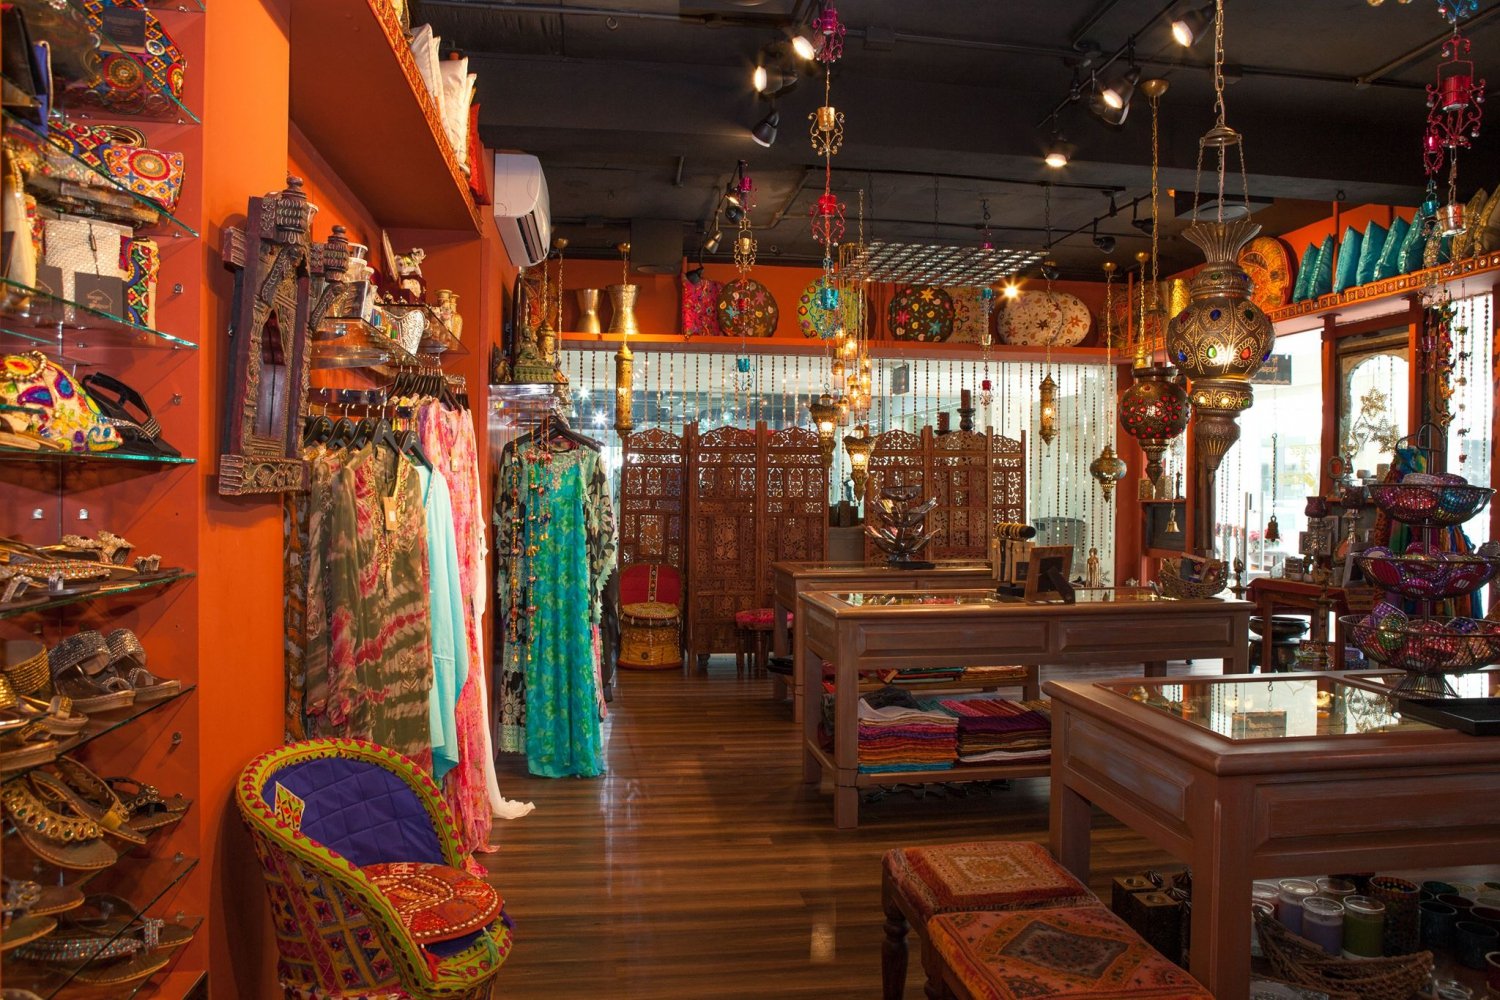 House of Jaipur Boutique & Tea Room